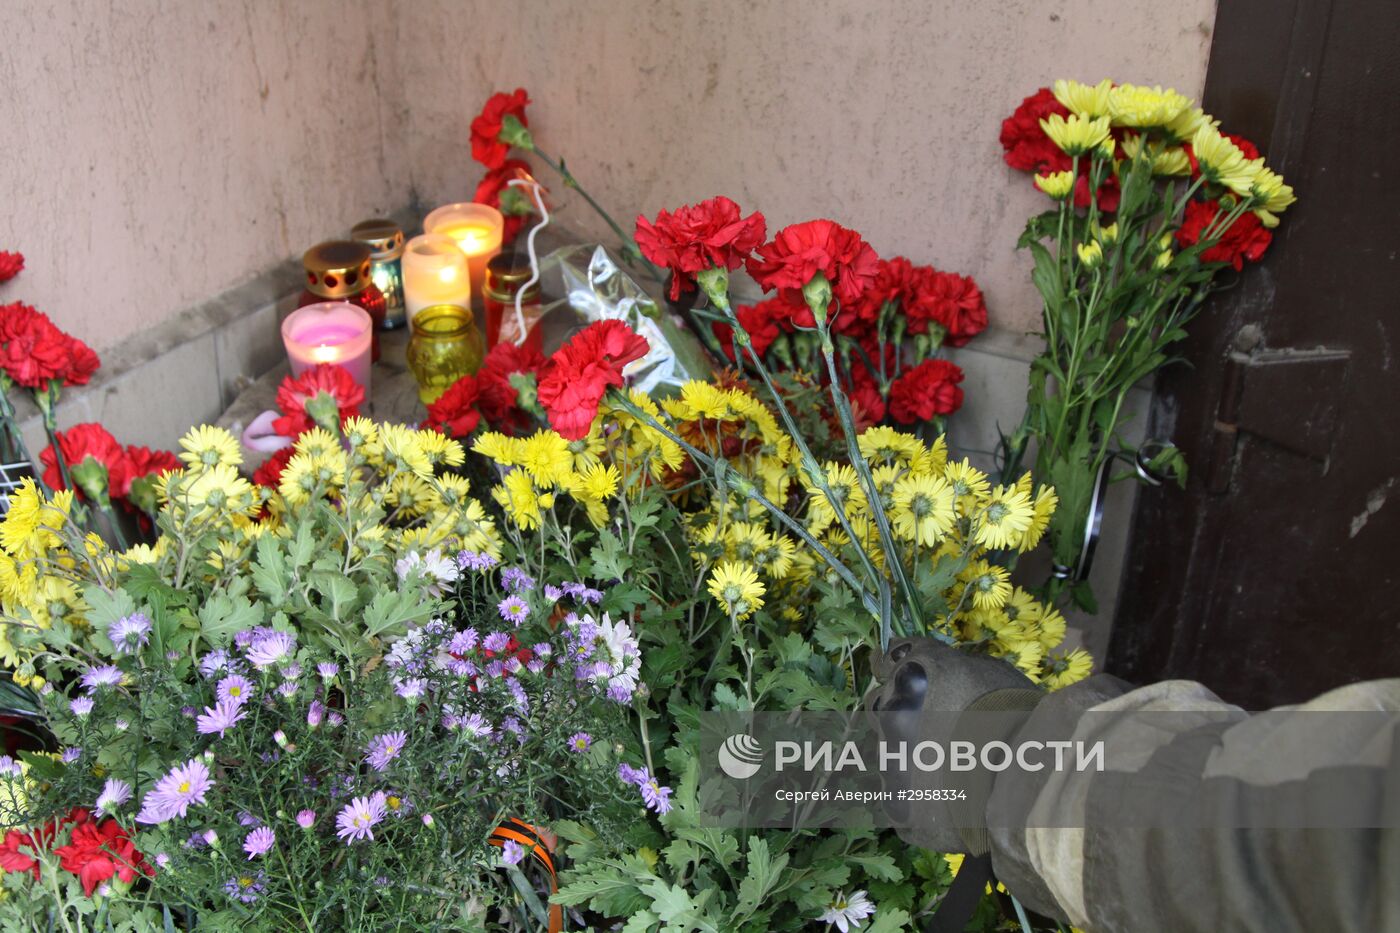 Командир ополчения ДНР Арсен Павлов ("Моторола") погиб в Донецке